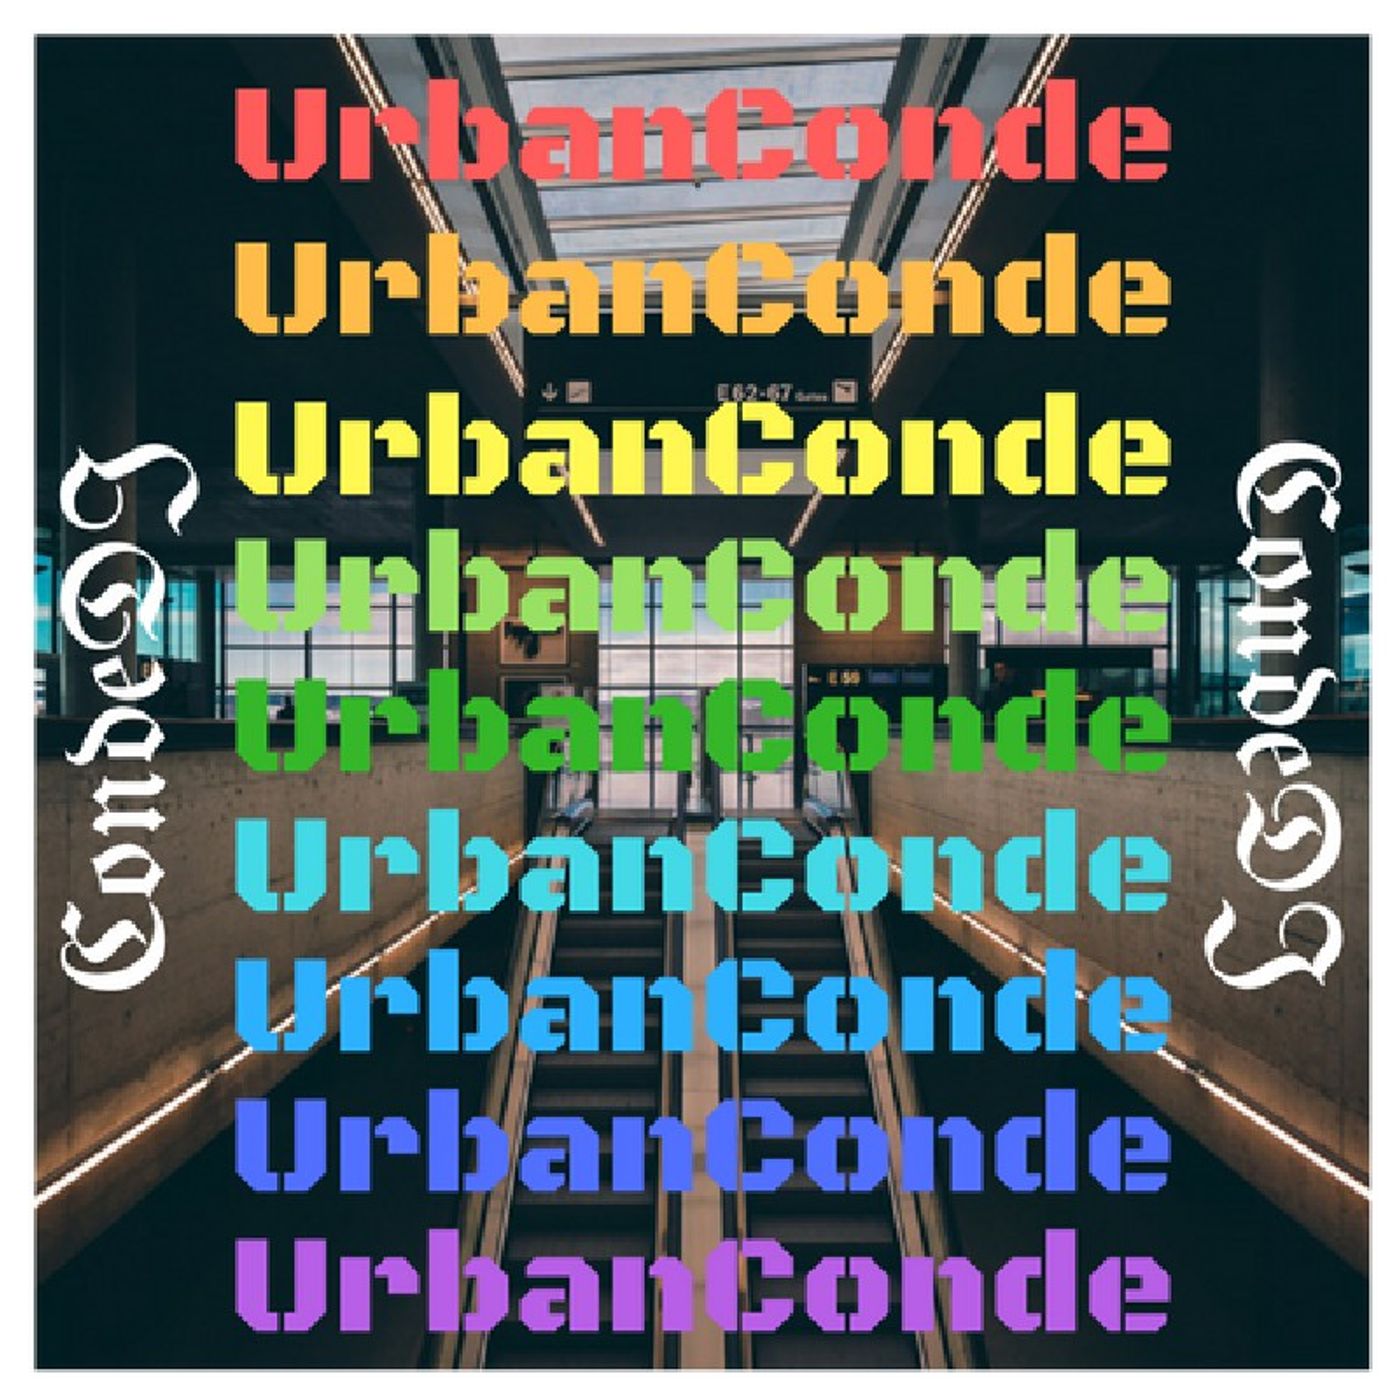 UrbanConde